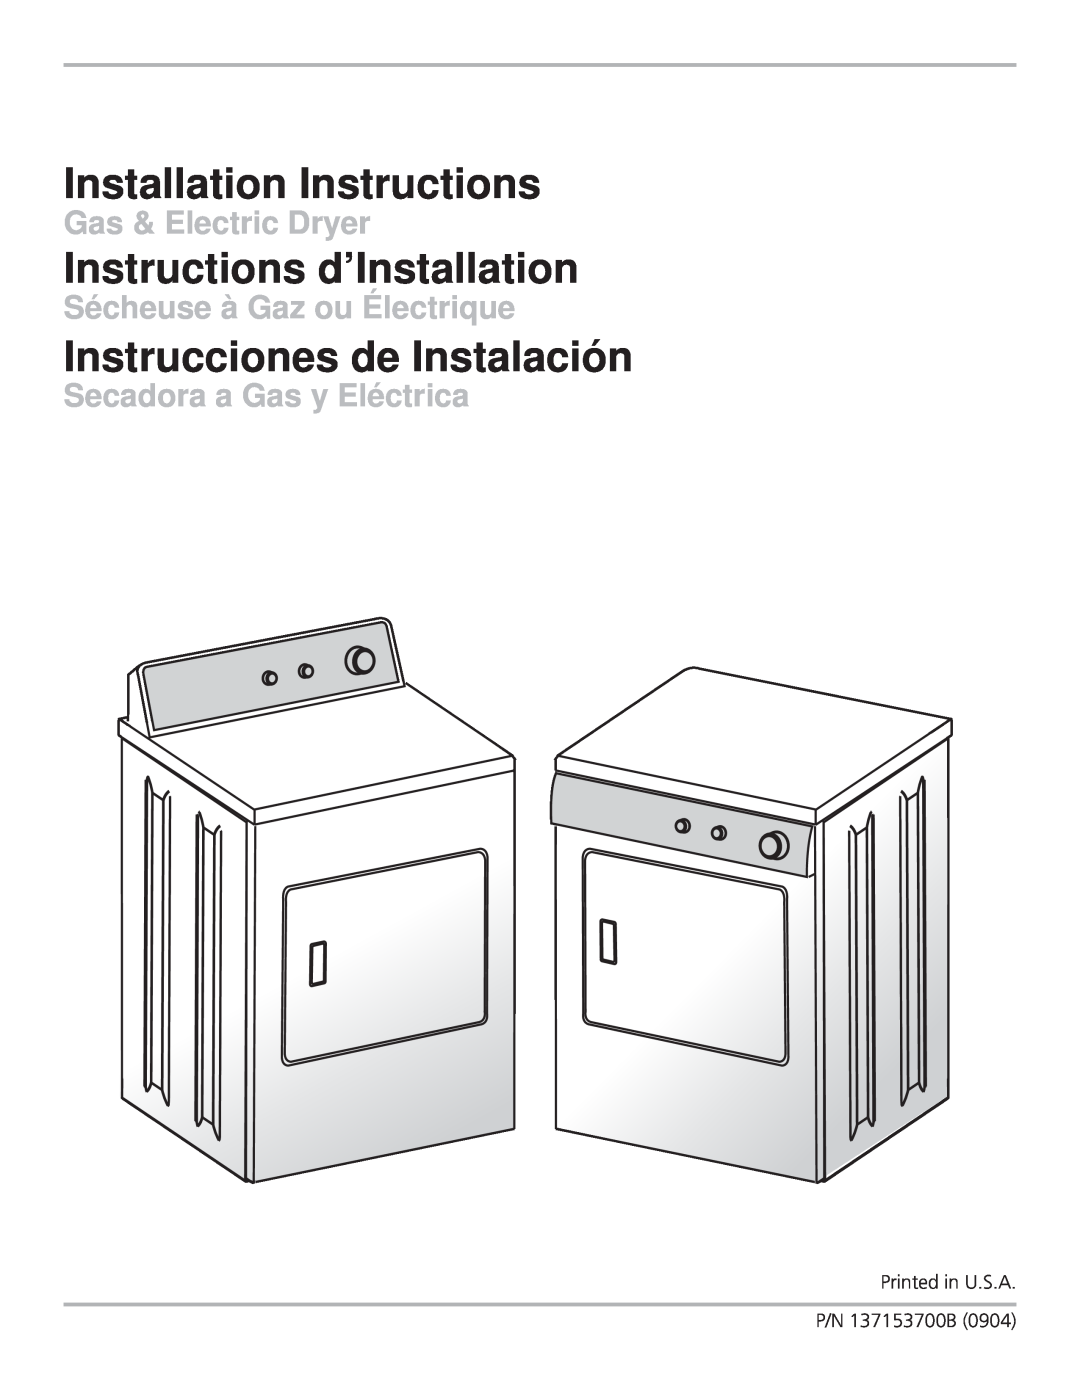 Frigidaire installation instructions Printed in U.S.A P/N 137153700B, Installation Instructions, Gas & Electric Dryer 